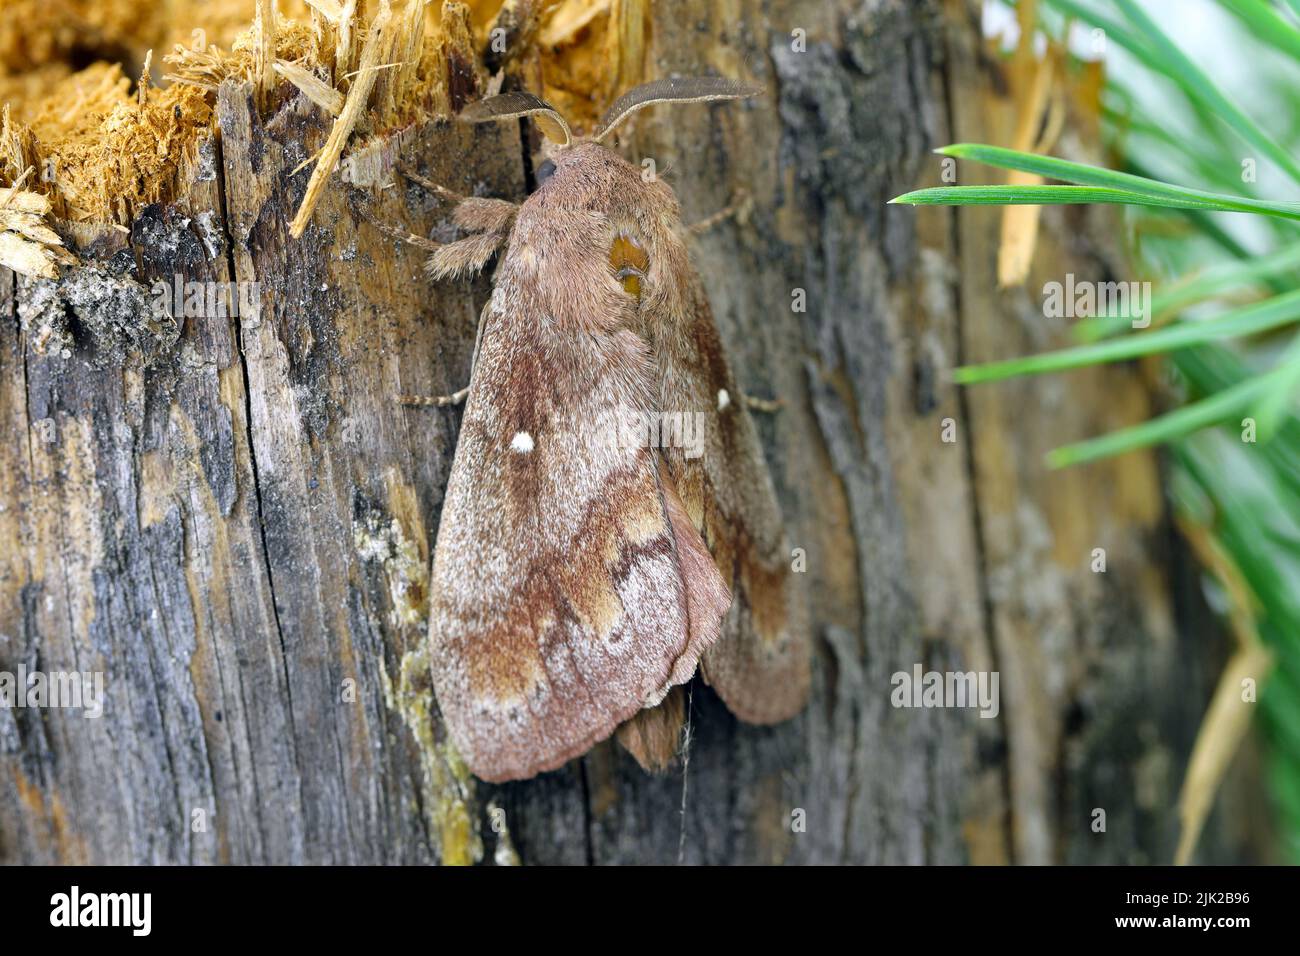 Pine tree Lappet Moth (Dendrolimus pini), male. Stock Photo